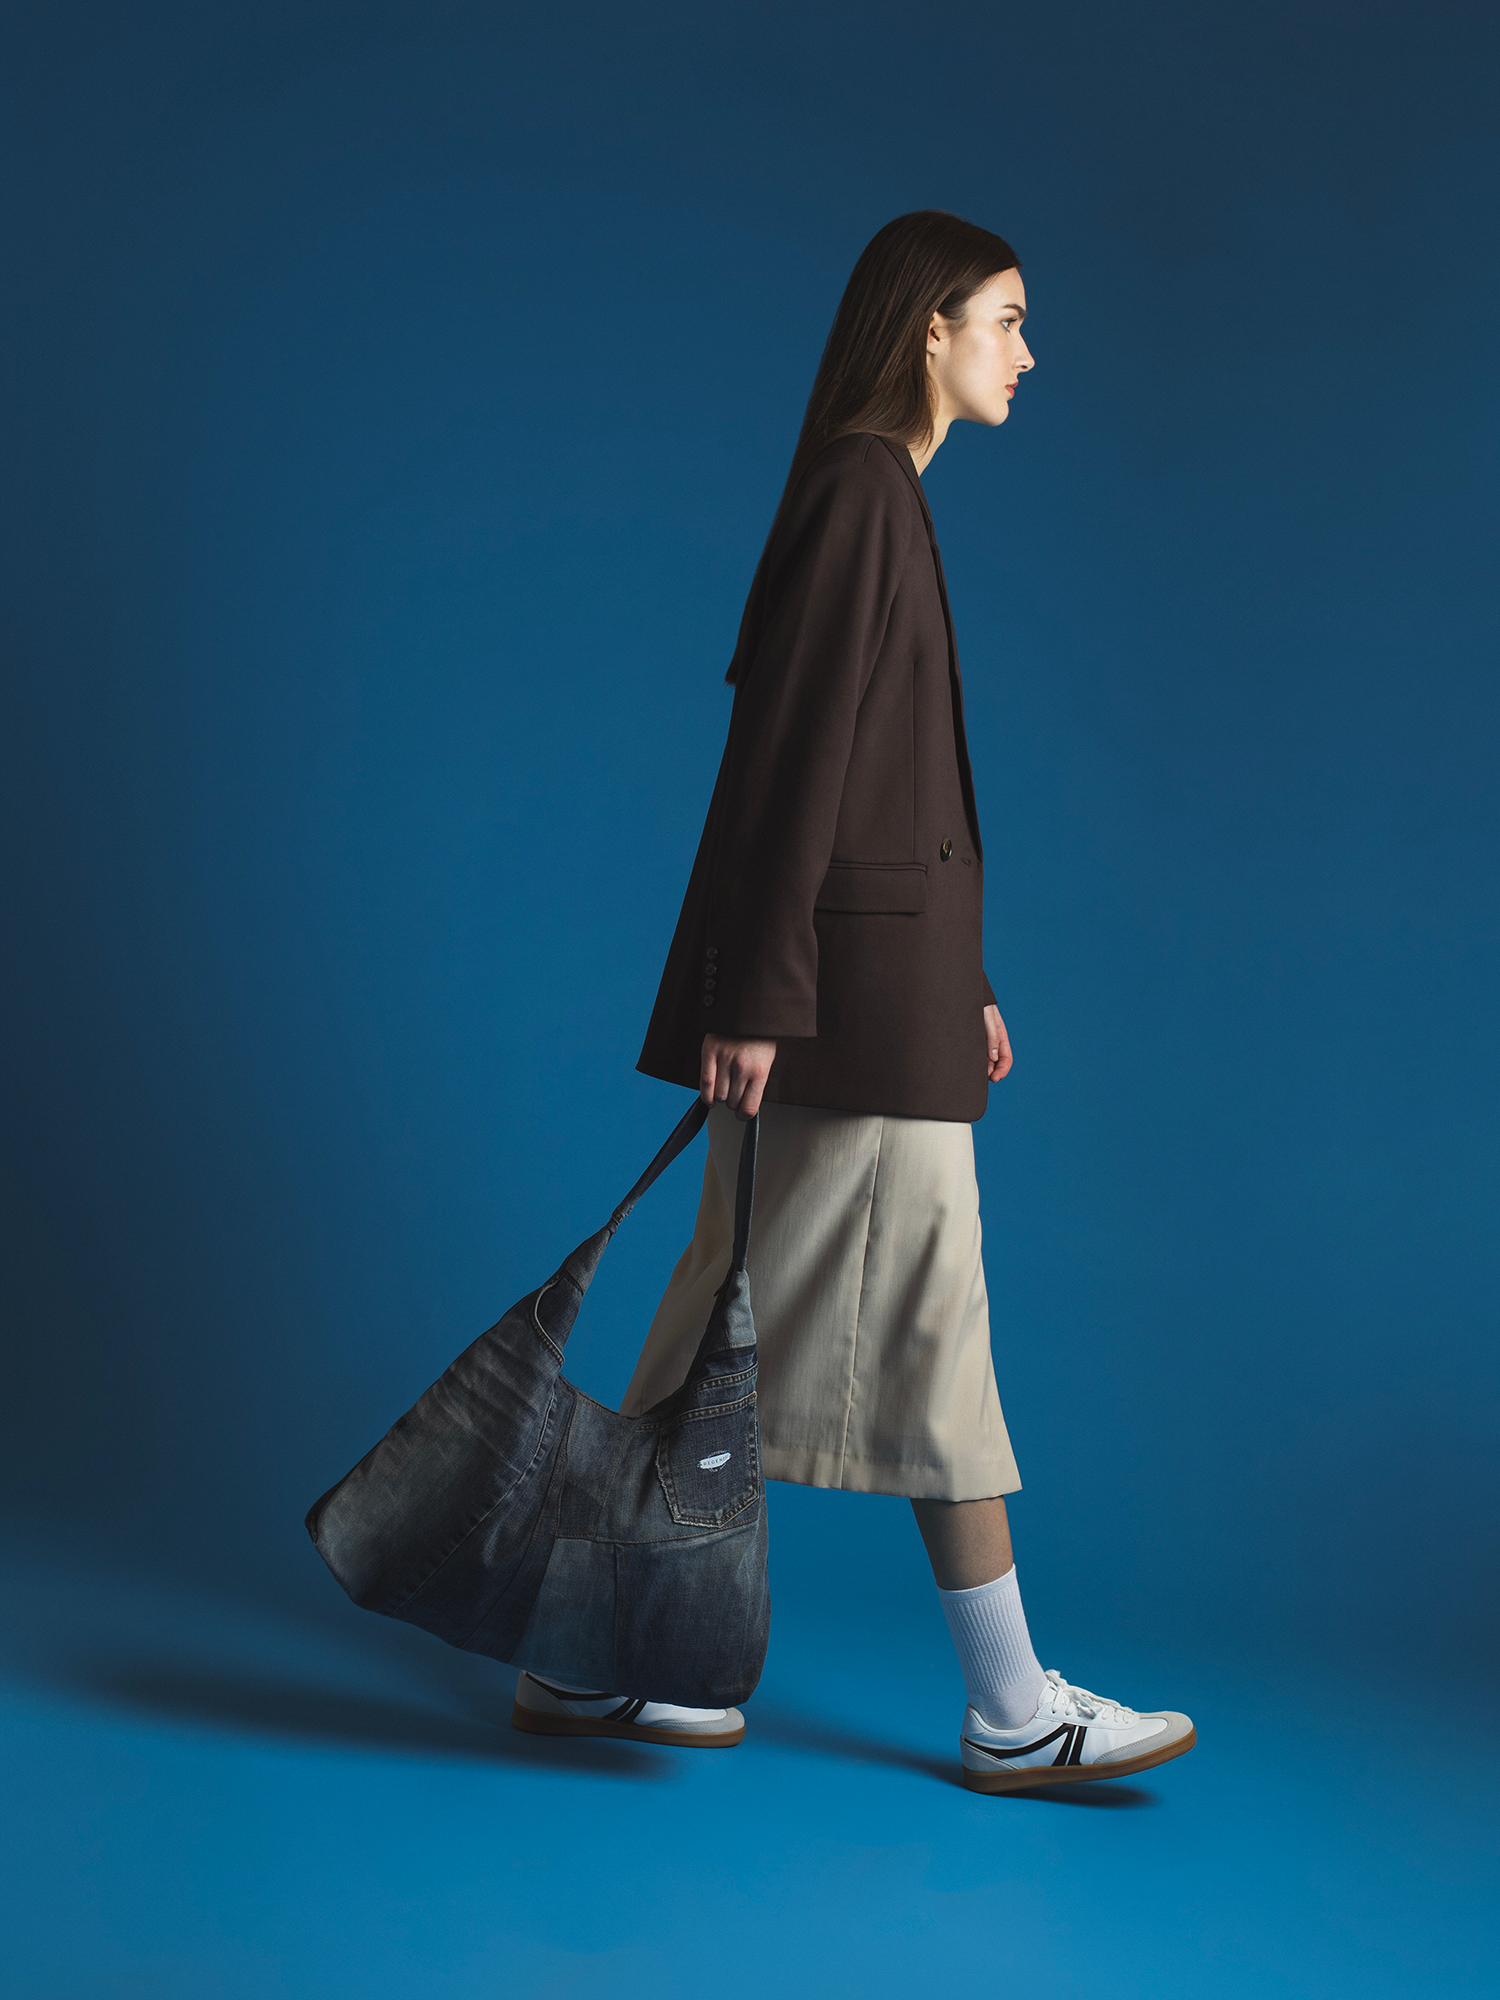 Pin by Martina Wei on nähen | Denim bag diy, Denim bag patterns, Recycled jeans  bag